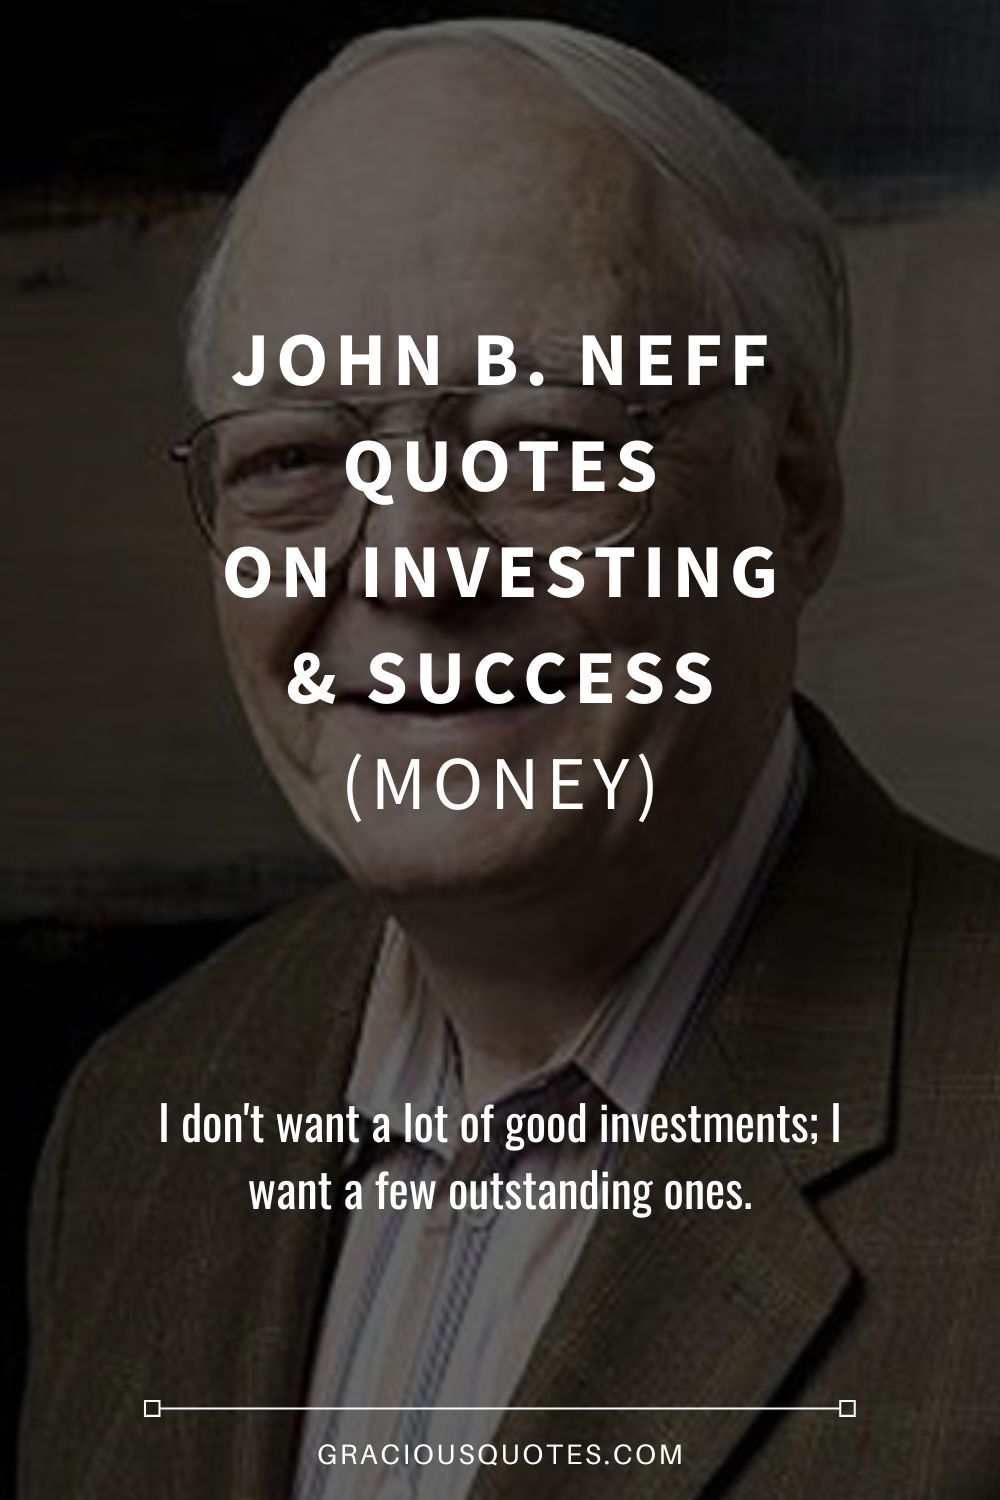 John B. Neff Quotes on Investing & Success (MONEY) - Gracious Quotes